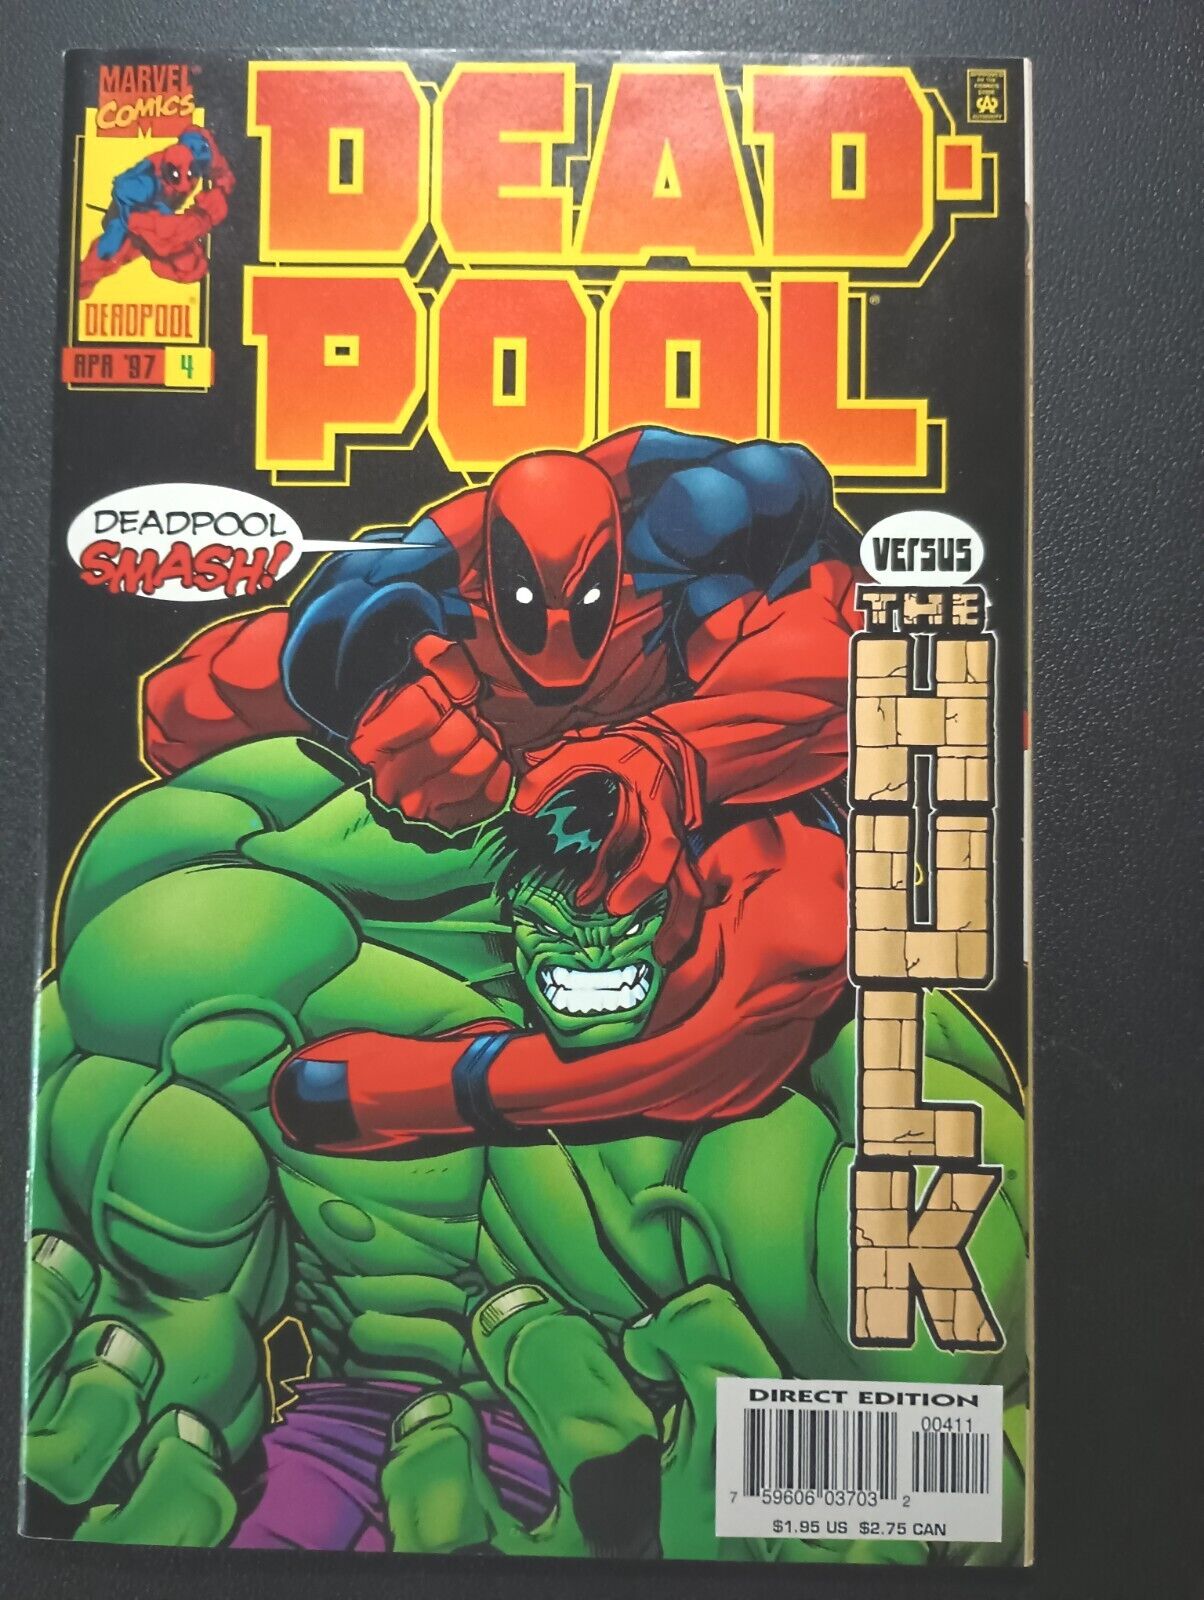 Deadpool (1997) # 4 - Classic Deadpool vs. Hulk battle Near Mint- Condition 